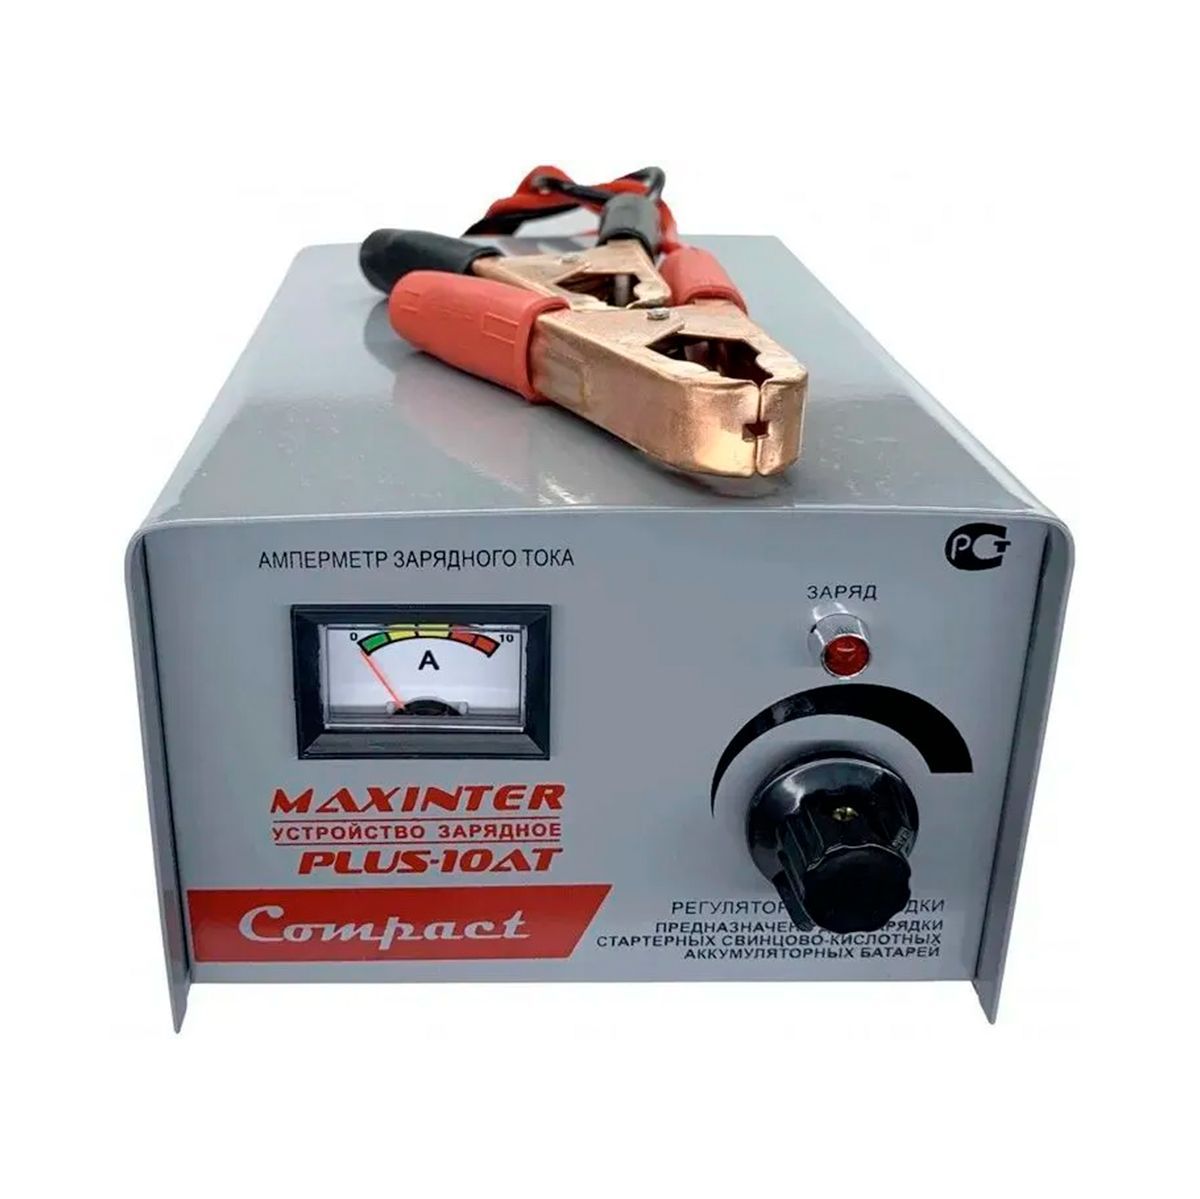 Максинтер зарядное. Plus-10 АТ зарядное у-во Plus-10 АТ Maxinter. Зарядные Maxinter 10at. Зарядное устройство Maxinter Plus-10a. Зарядные Maxinter 10at Compact.